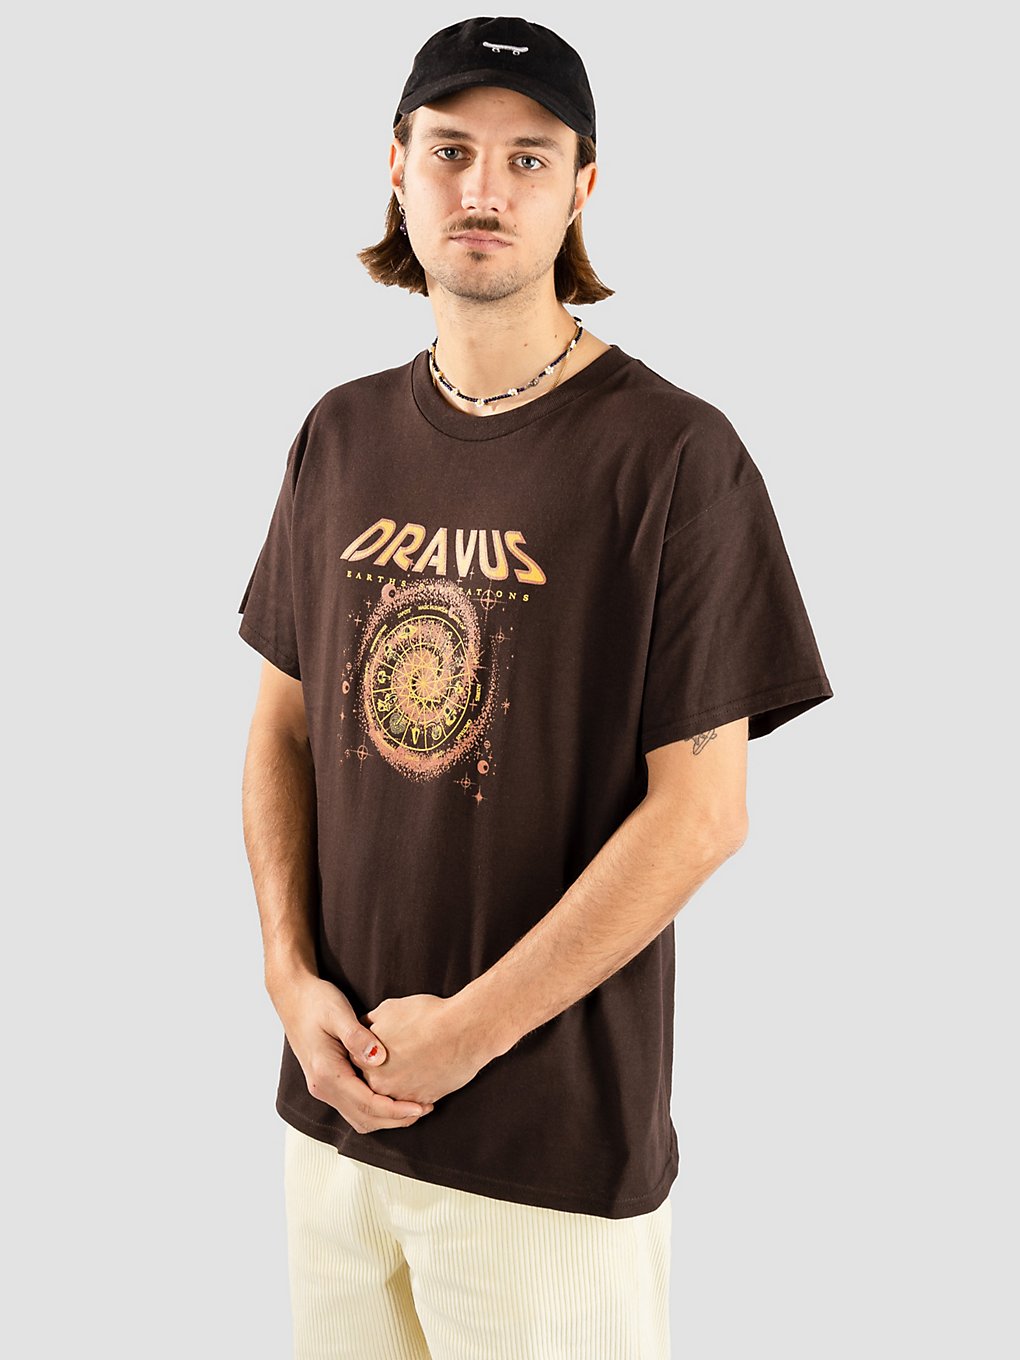 Dravus Earth Salutation T-Shirt brown kaufen